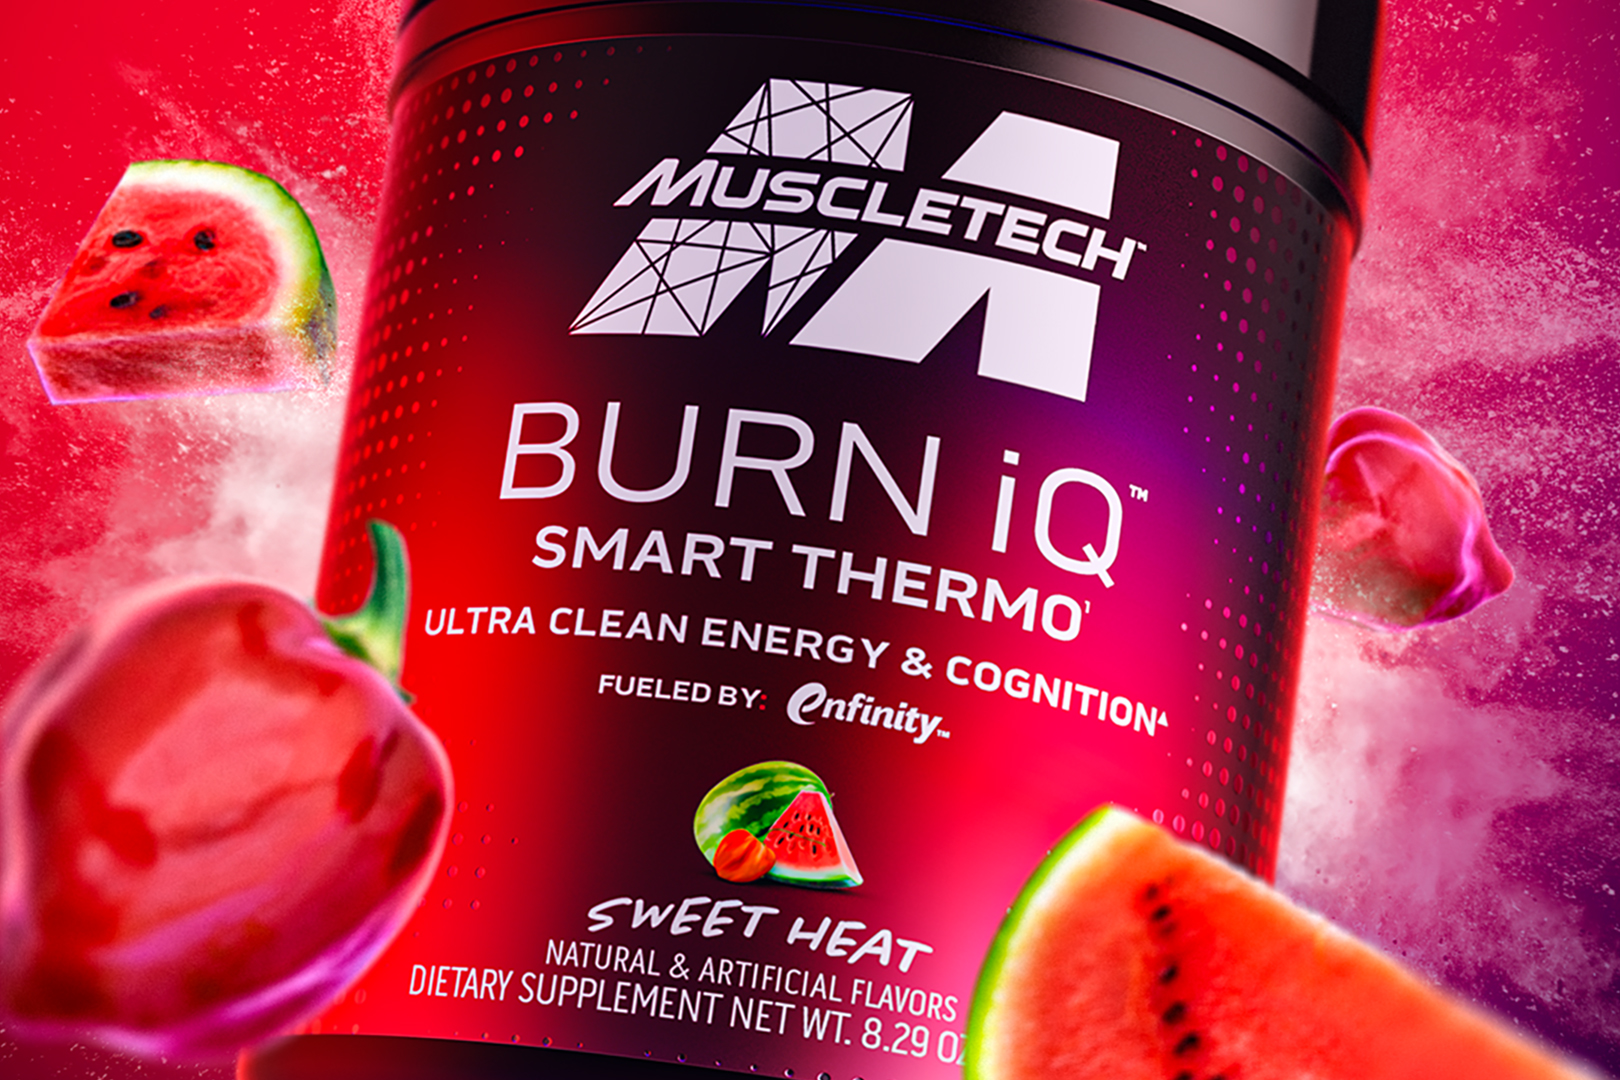 Muscletech Launches Burn Iq At Vitamin Shoppe